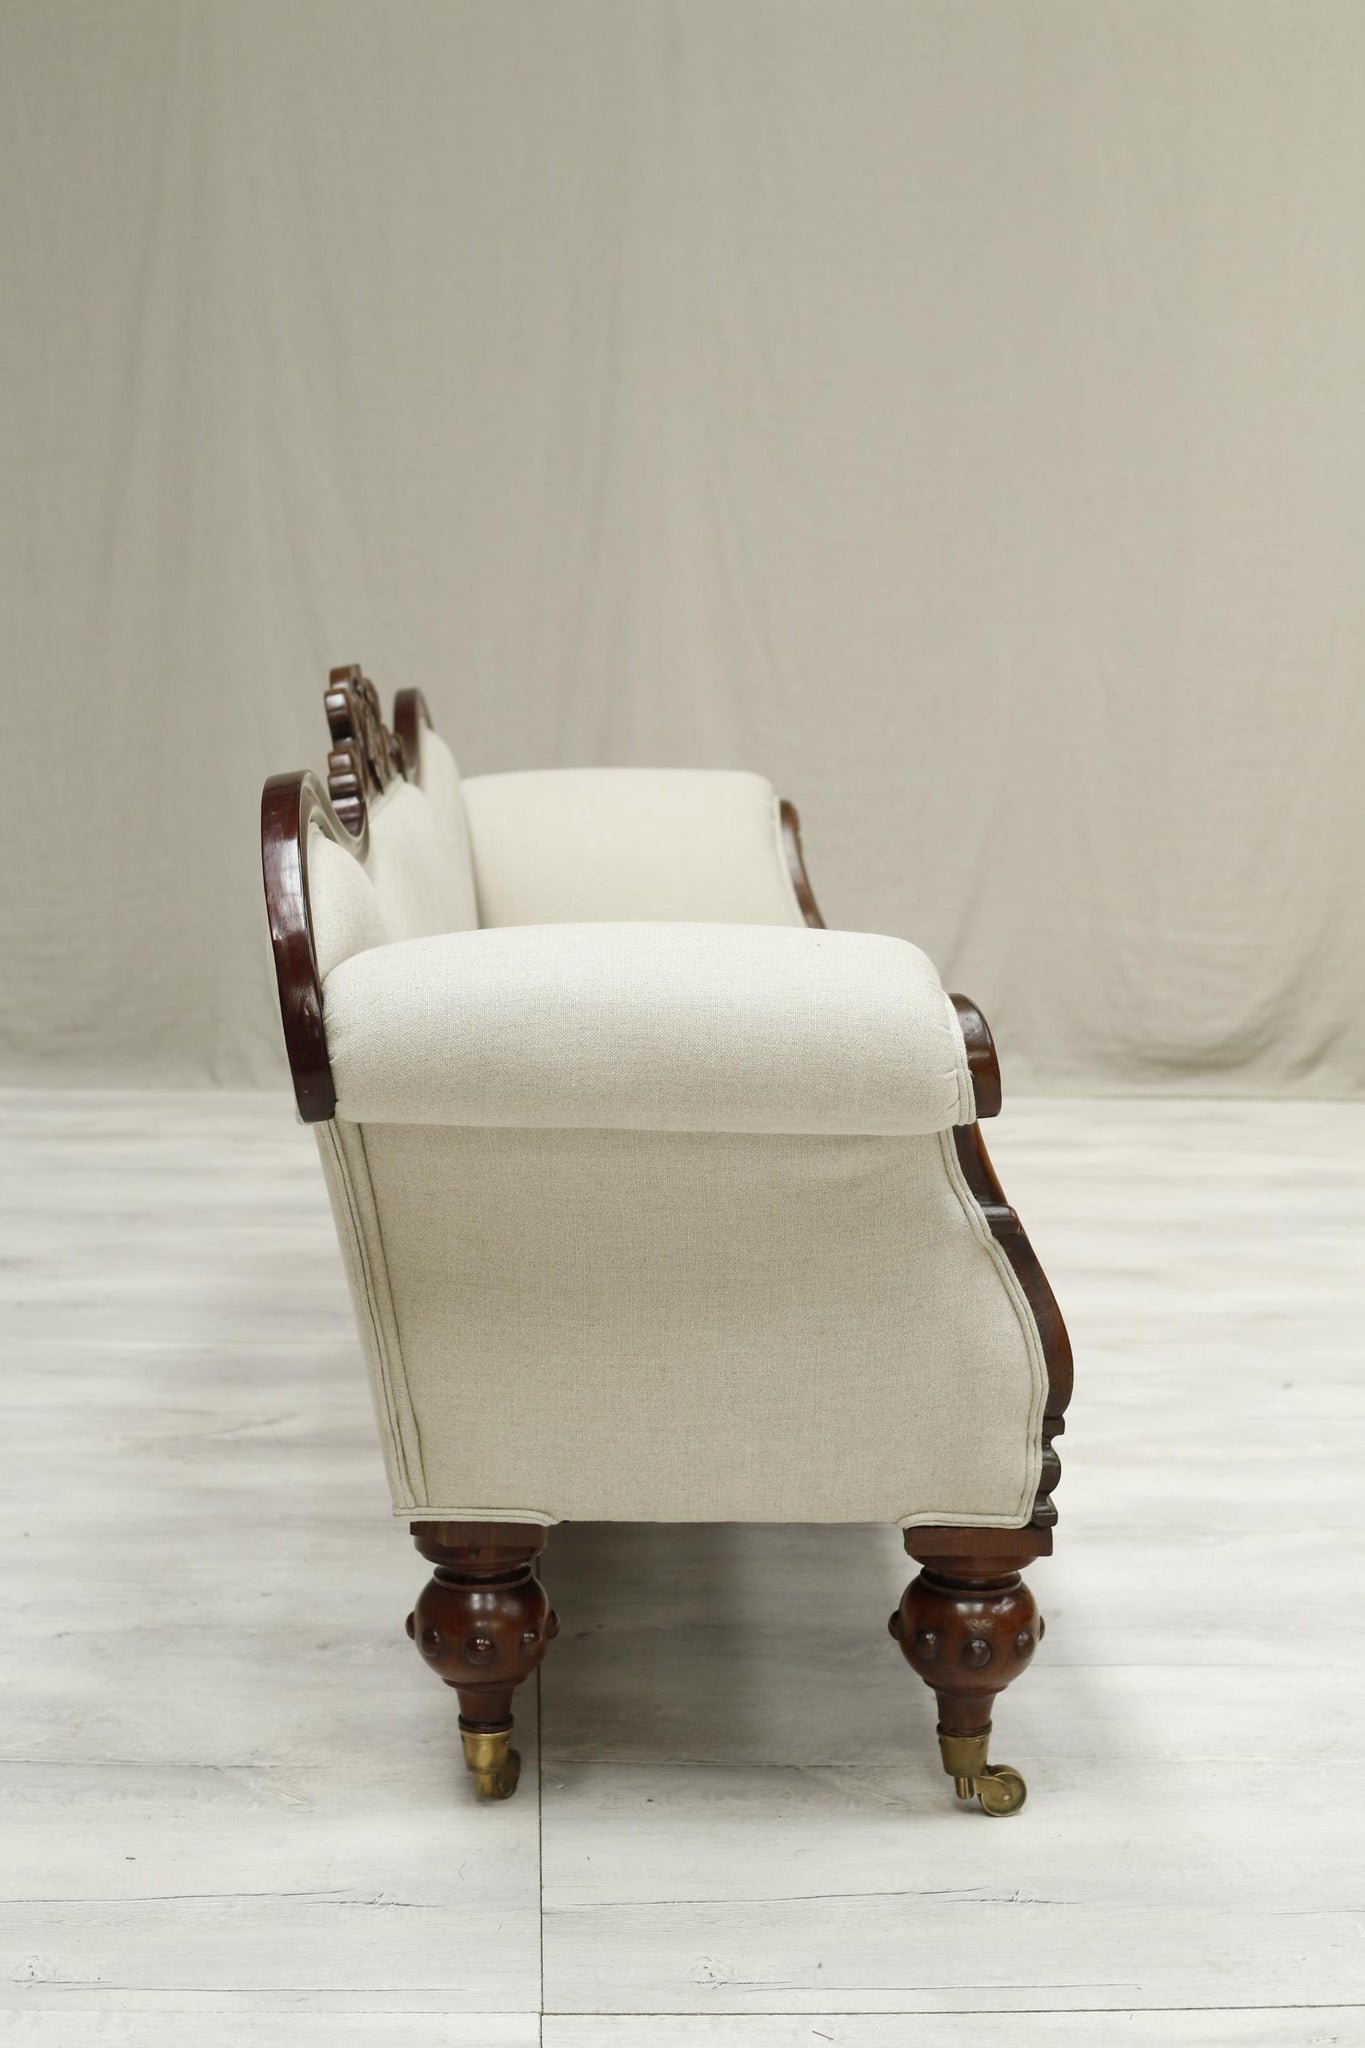 English Regency mahogany sofa upholstered in linen - TallBoy Interiors